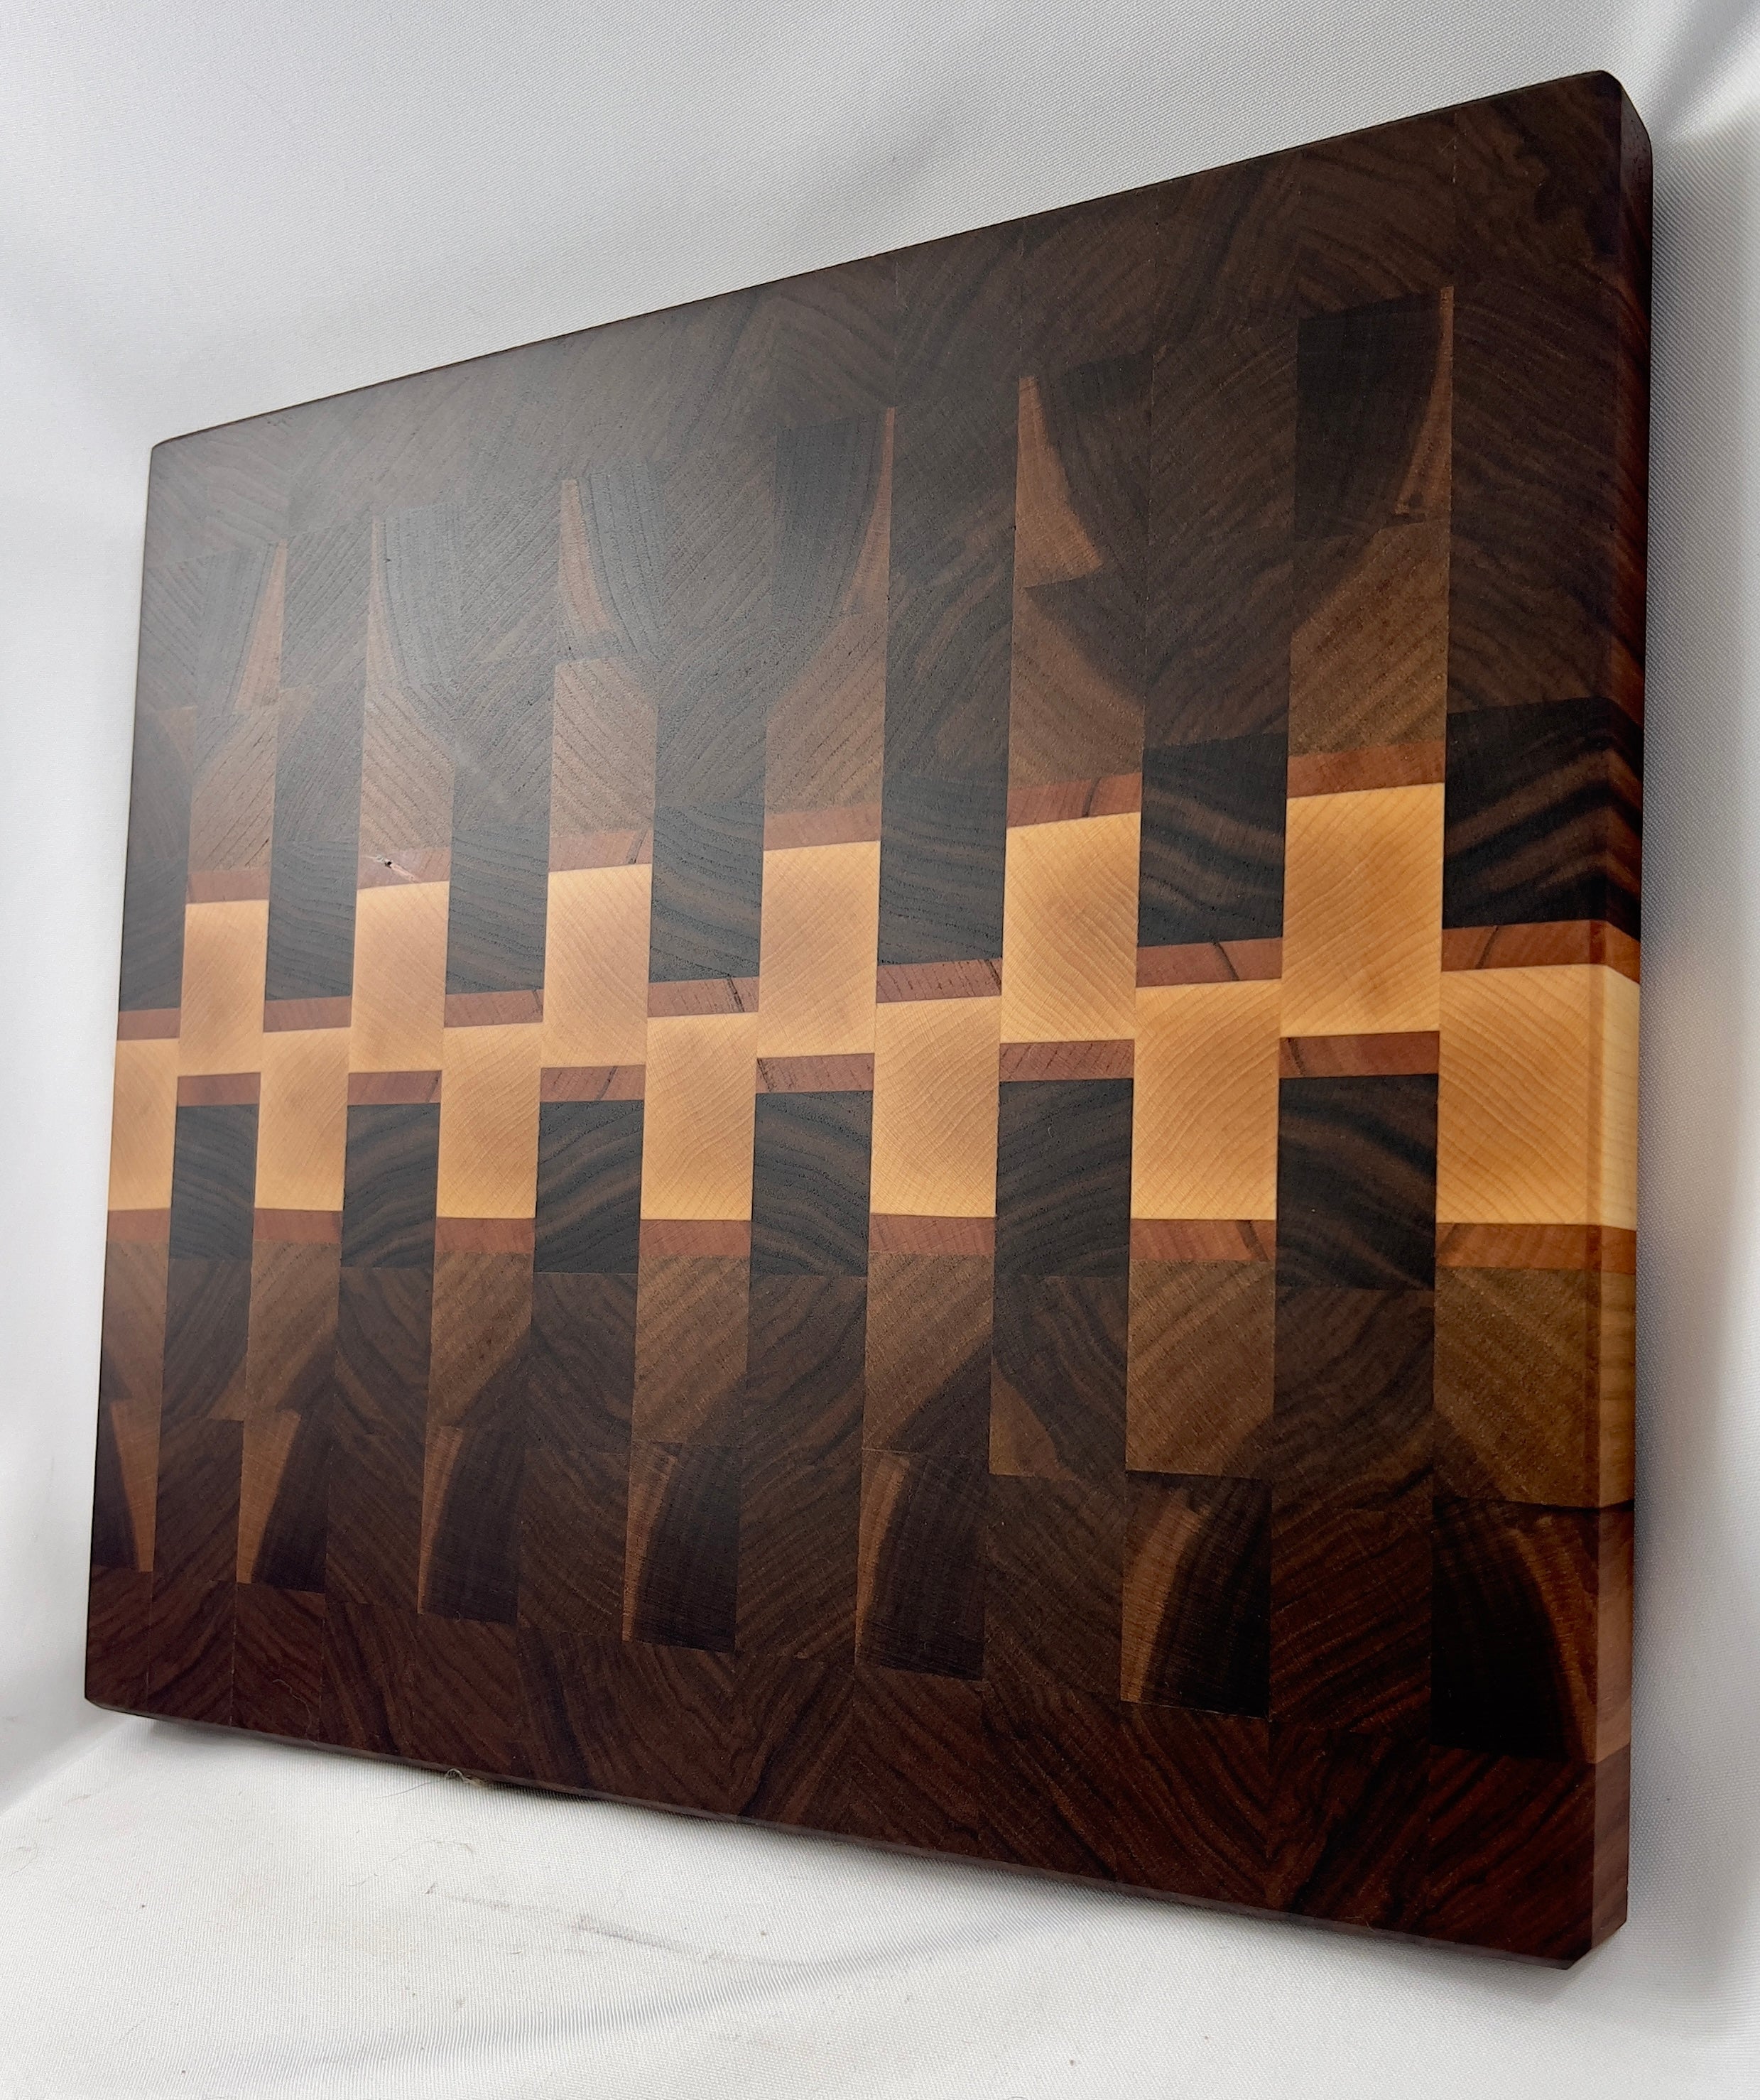 Criss-cross Cutting Board - Maple and Black Walnut